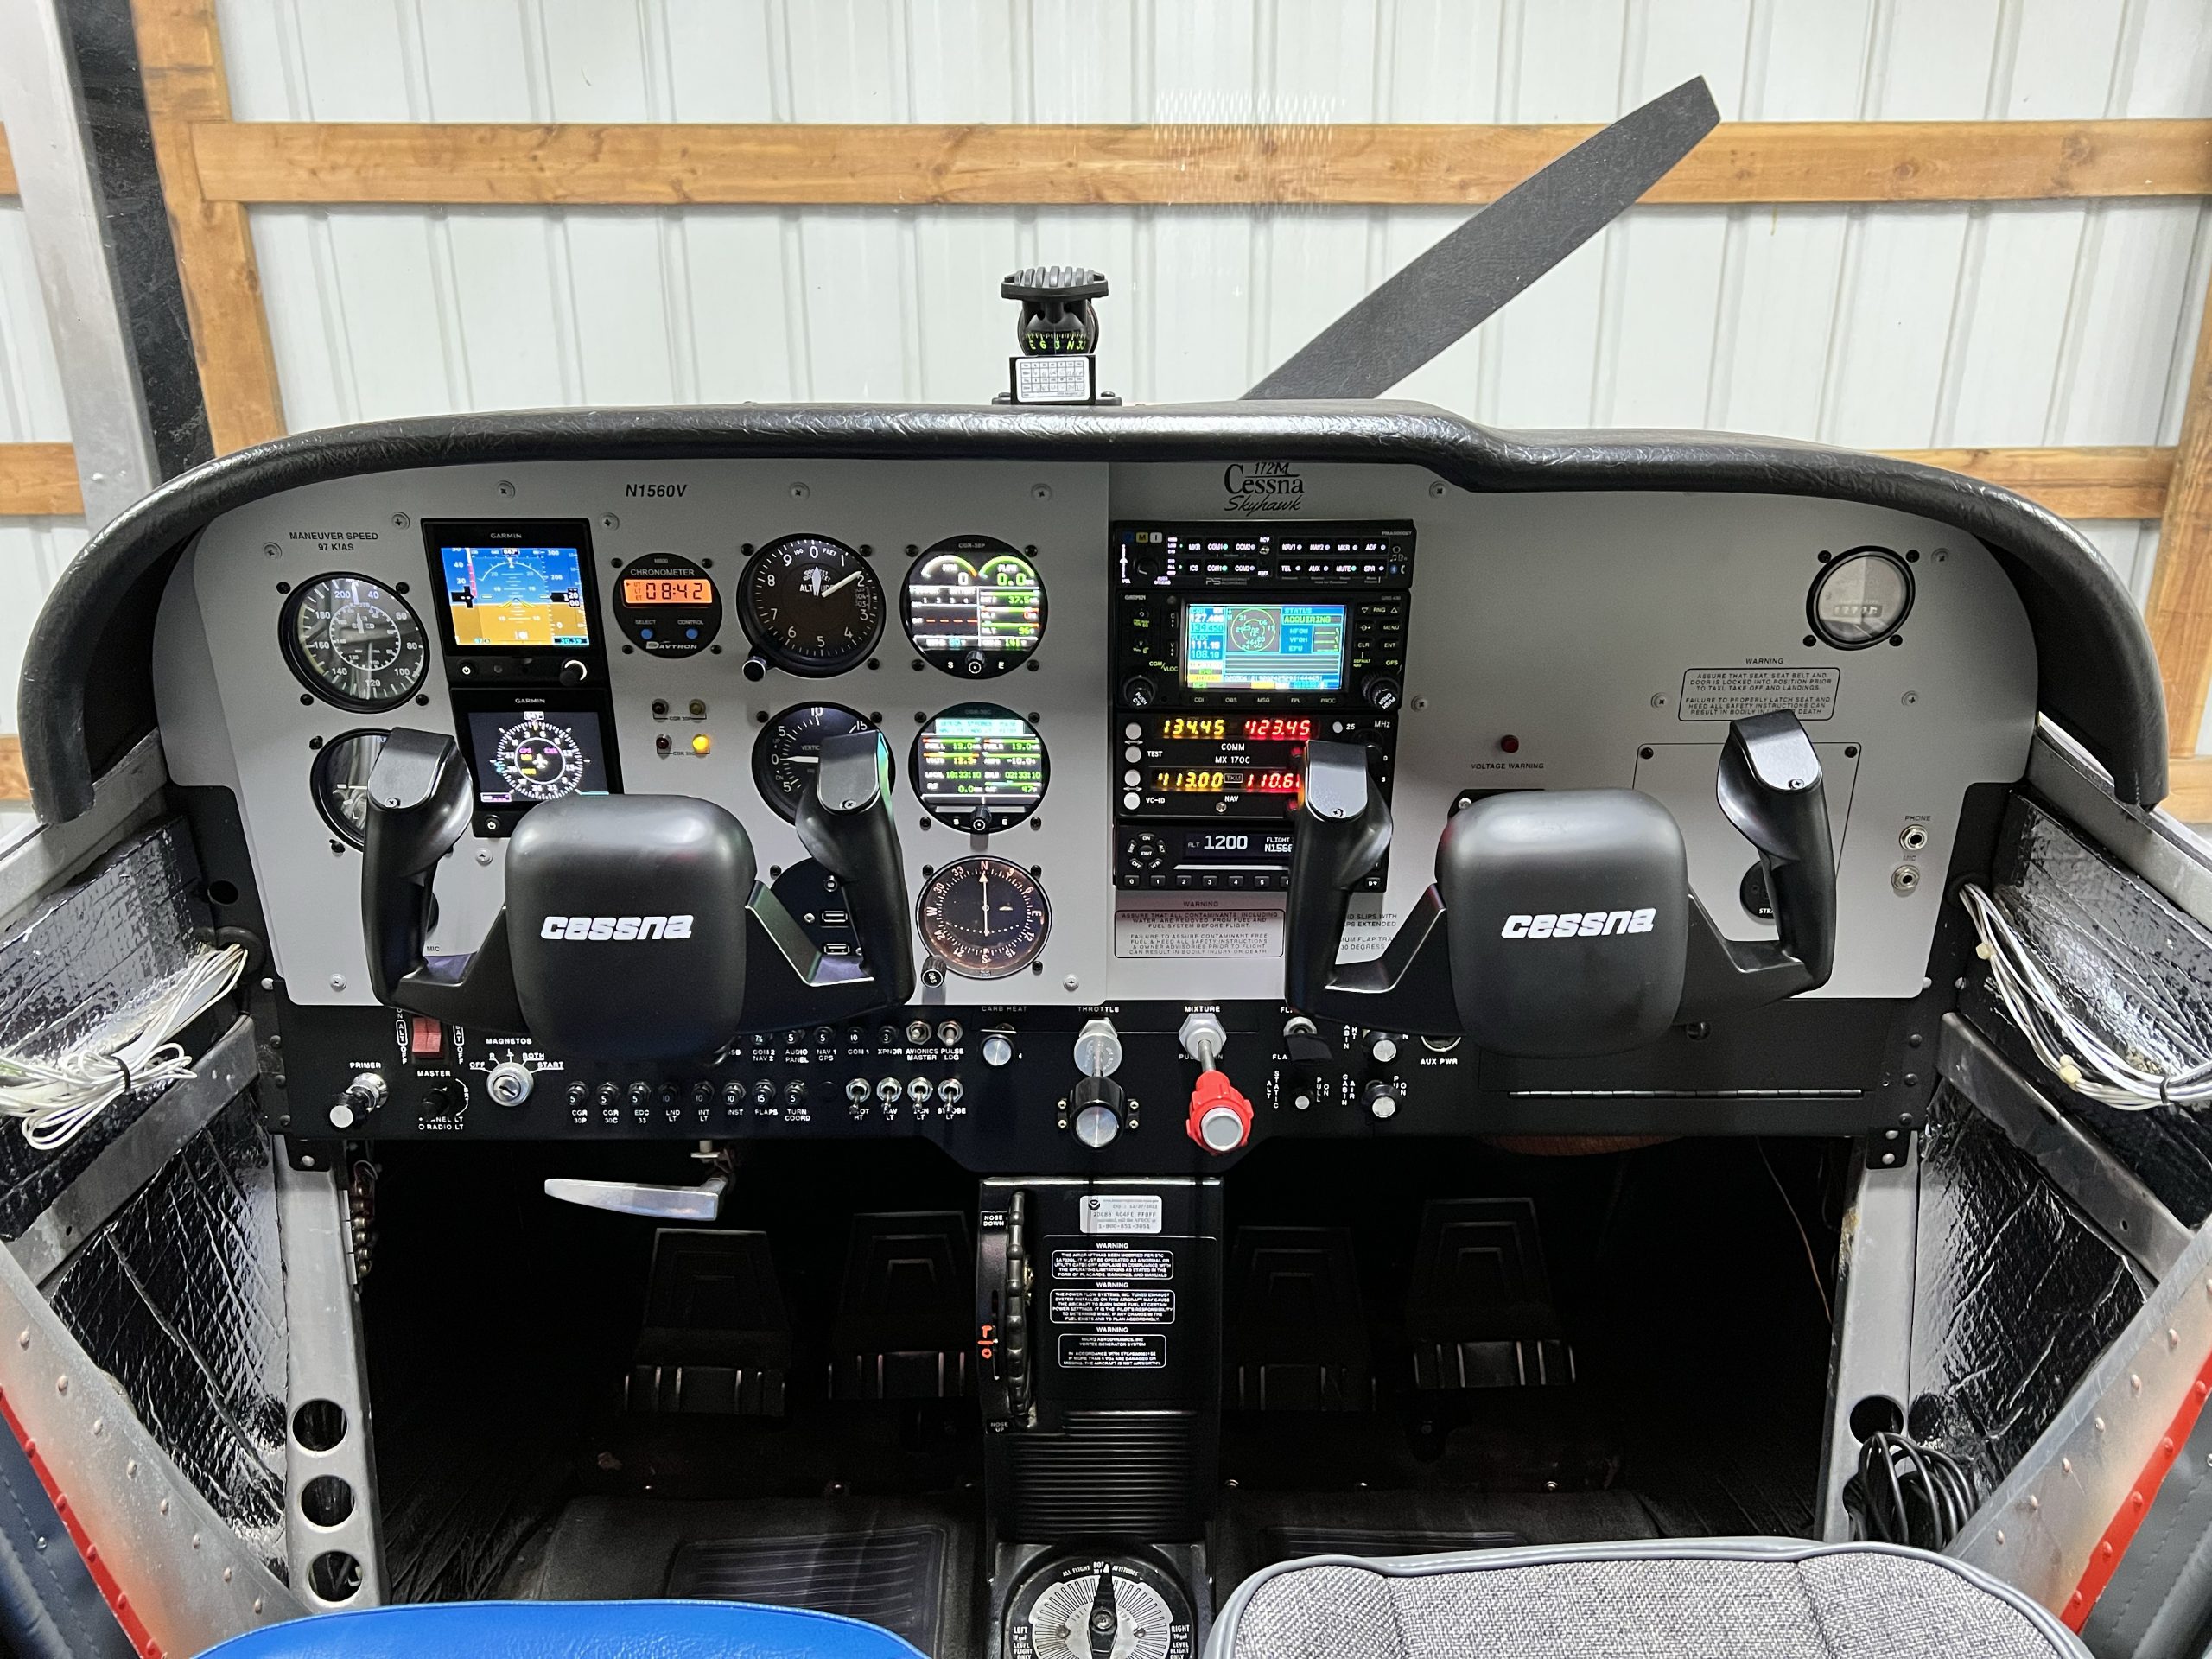 Cessna Instrument Panel - 172M with flush mounted Garmin G5's